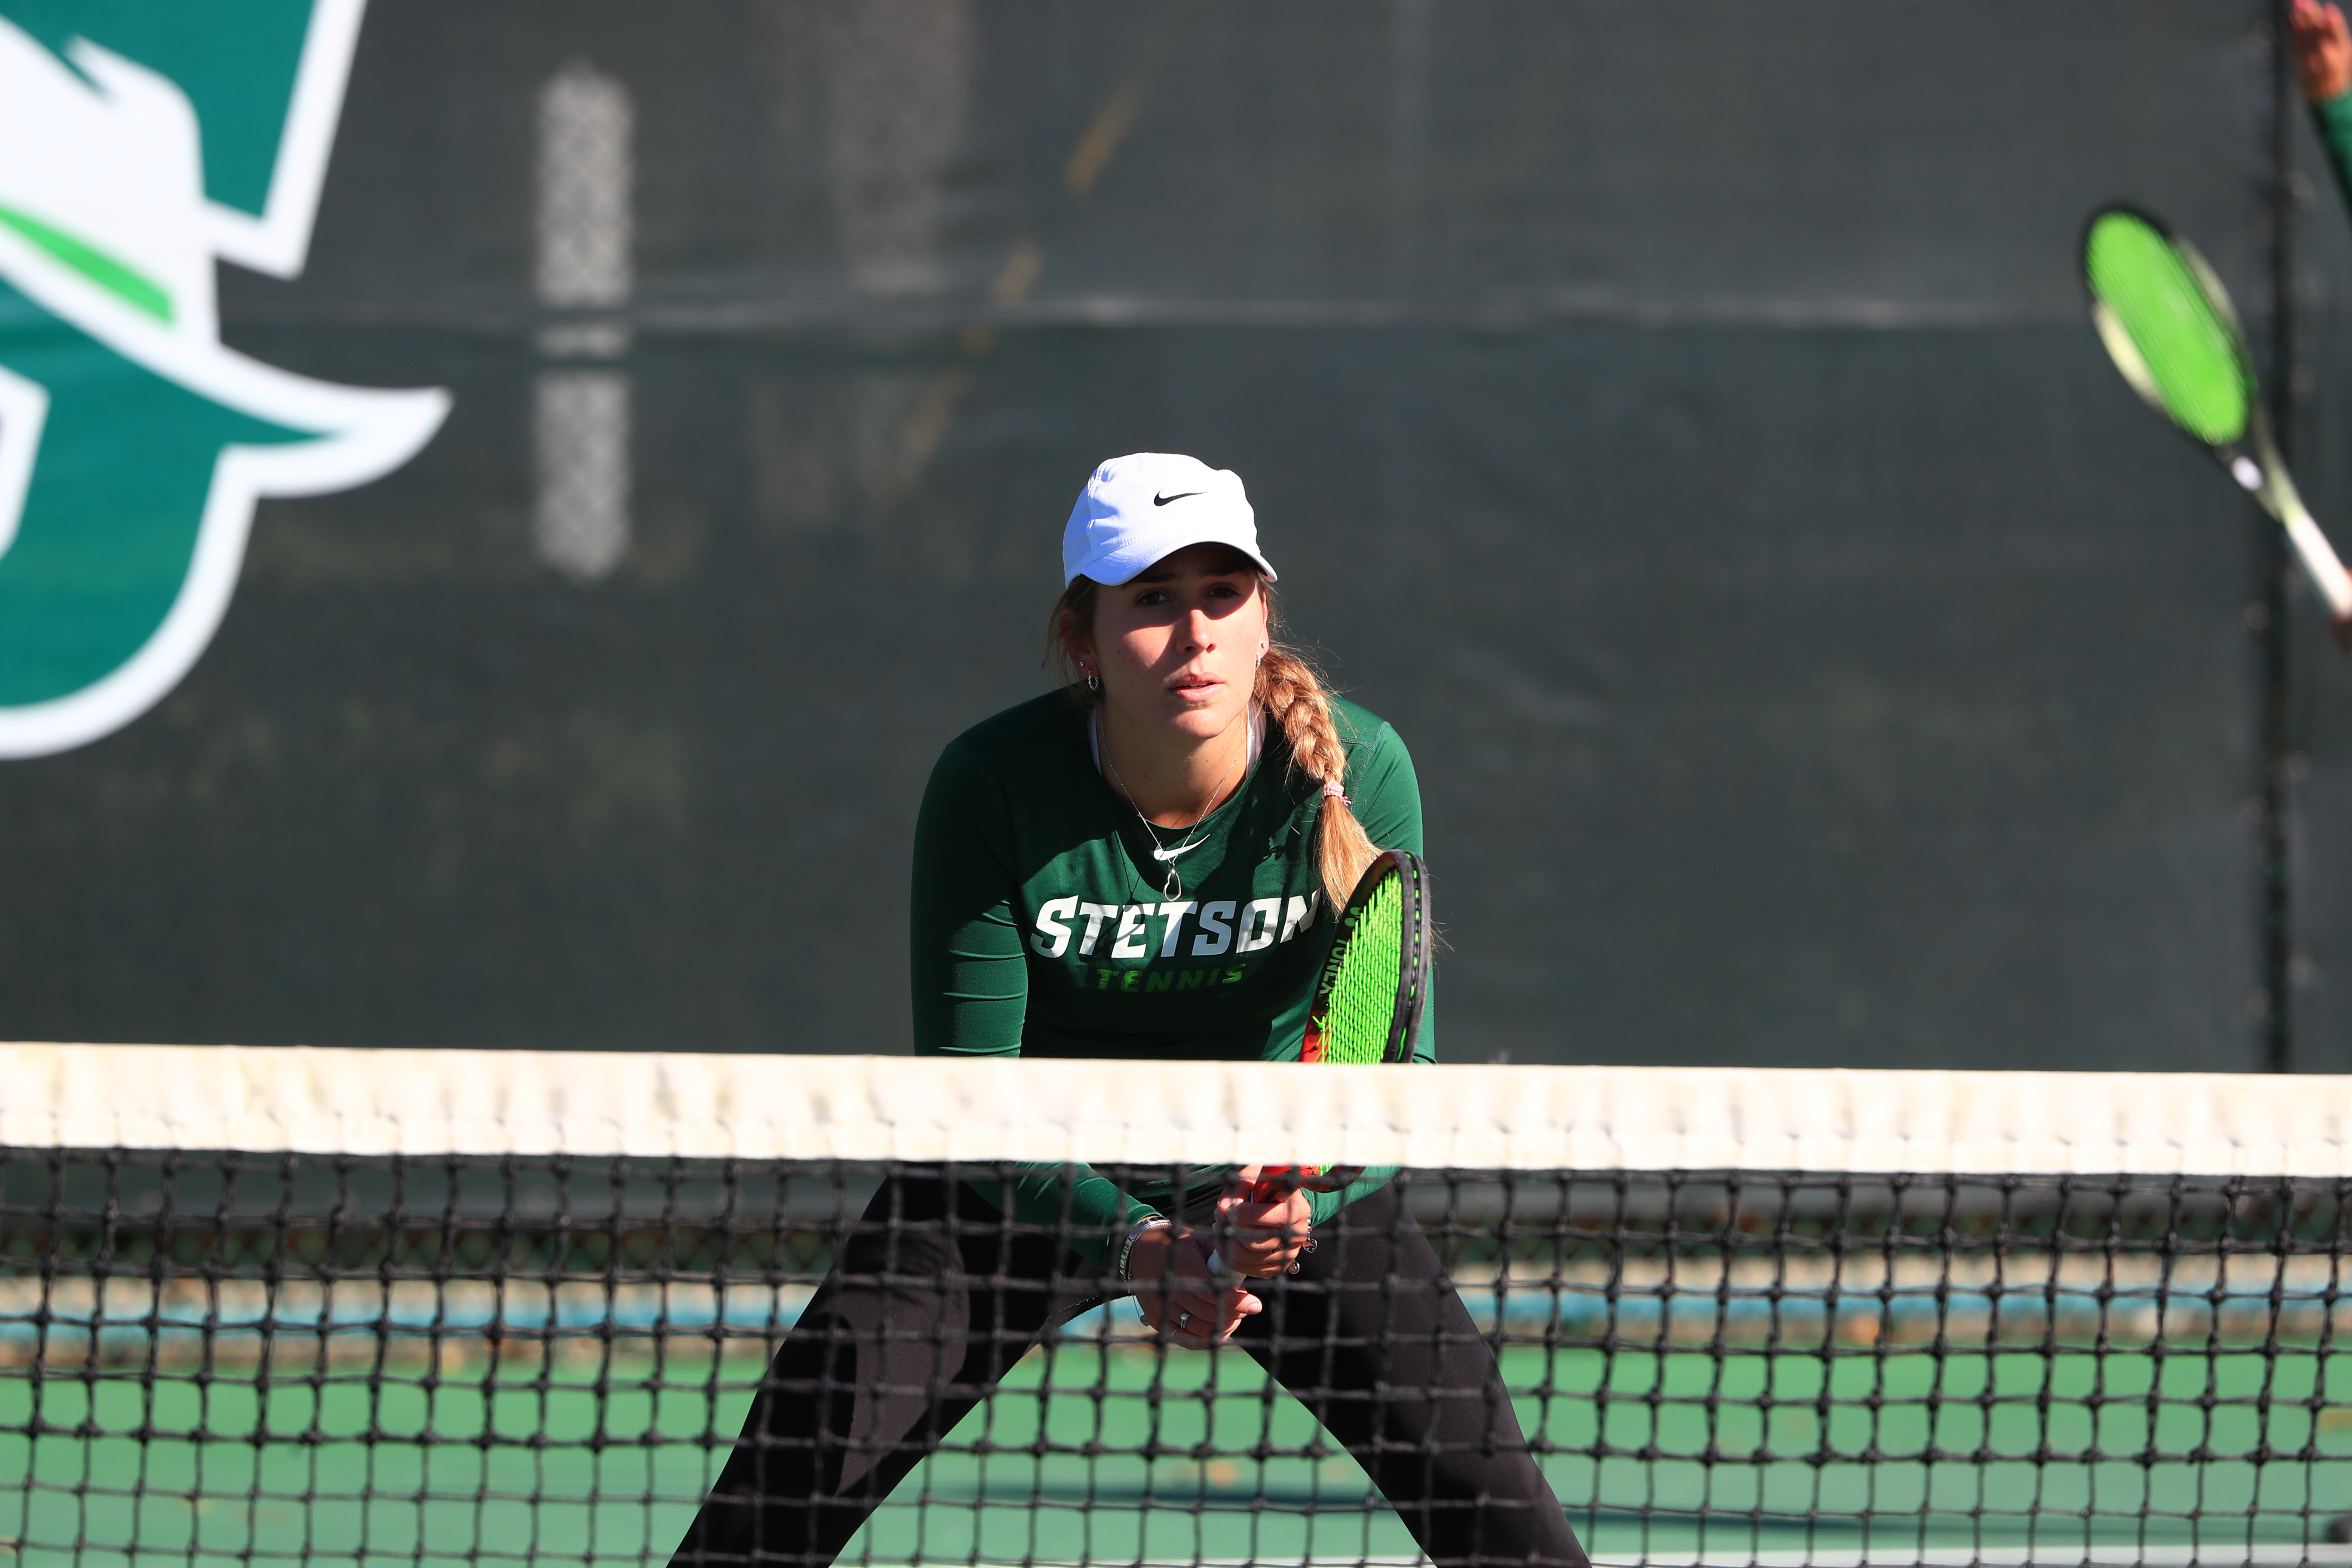 Elodie Foster playing tennis